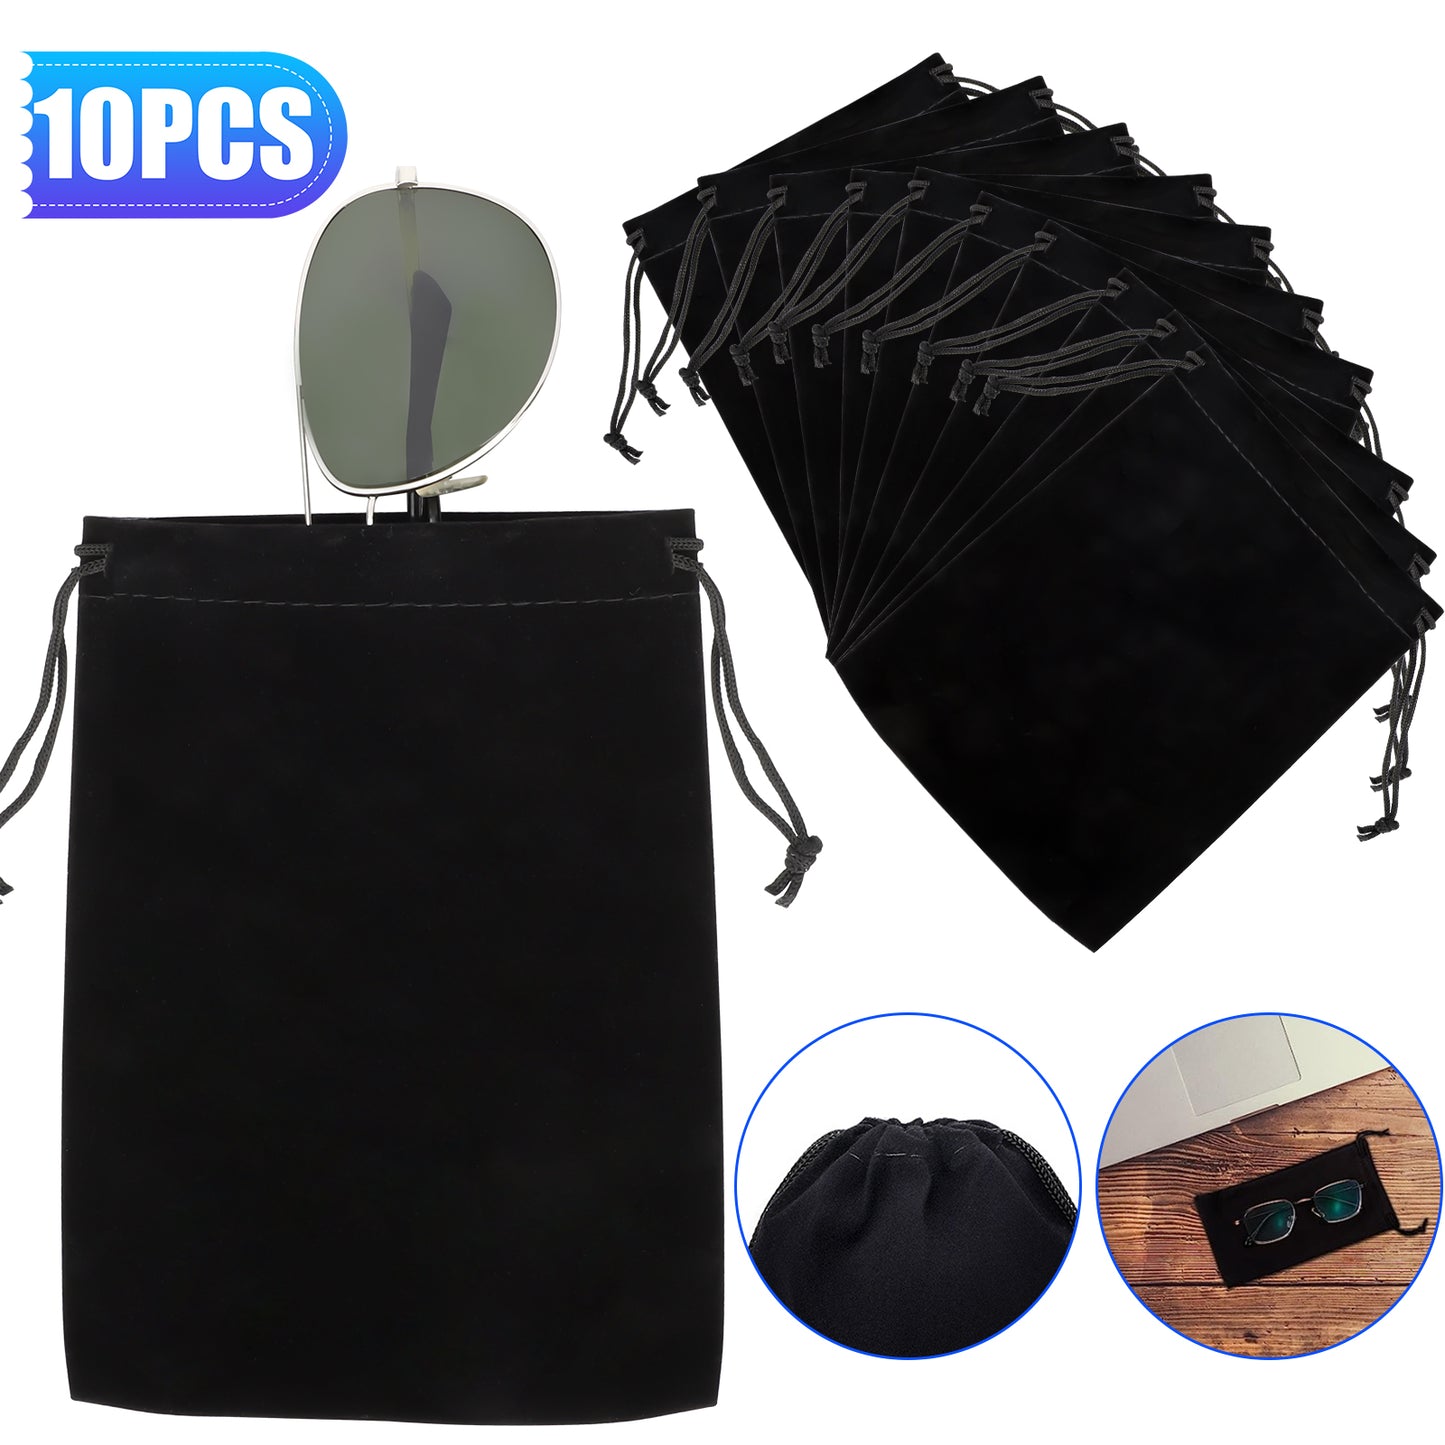 10pcs MicrofiberGlasses Carrying Pouch Bag